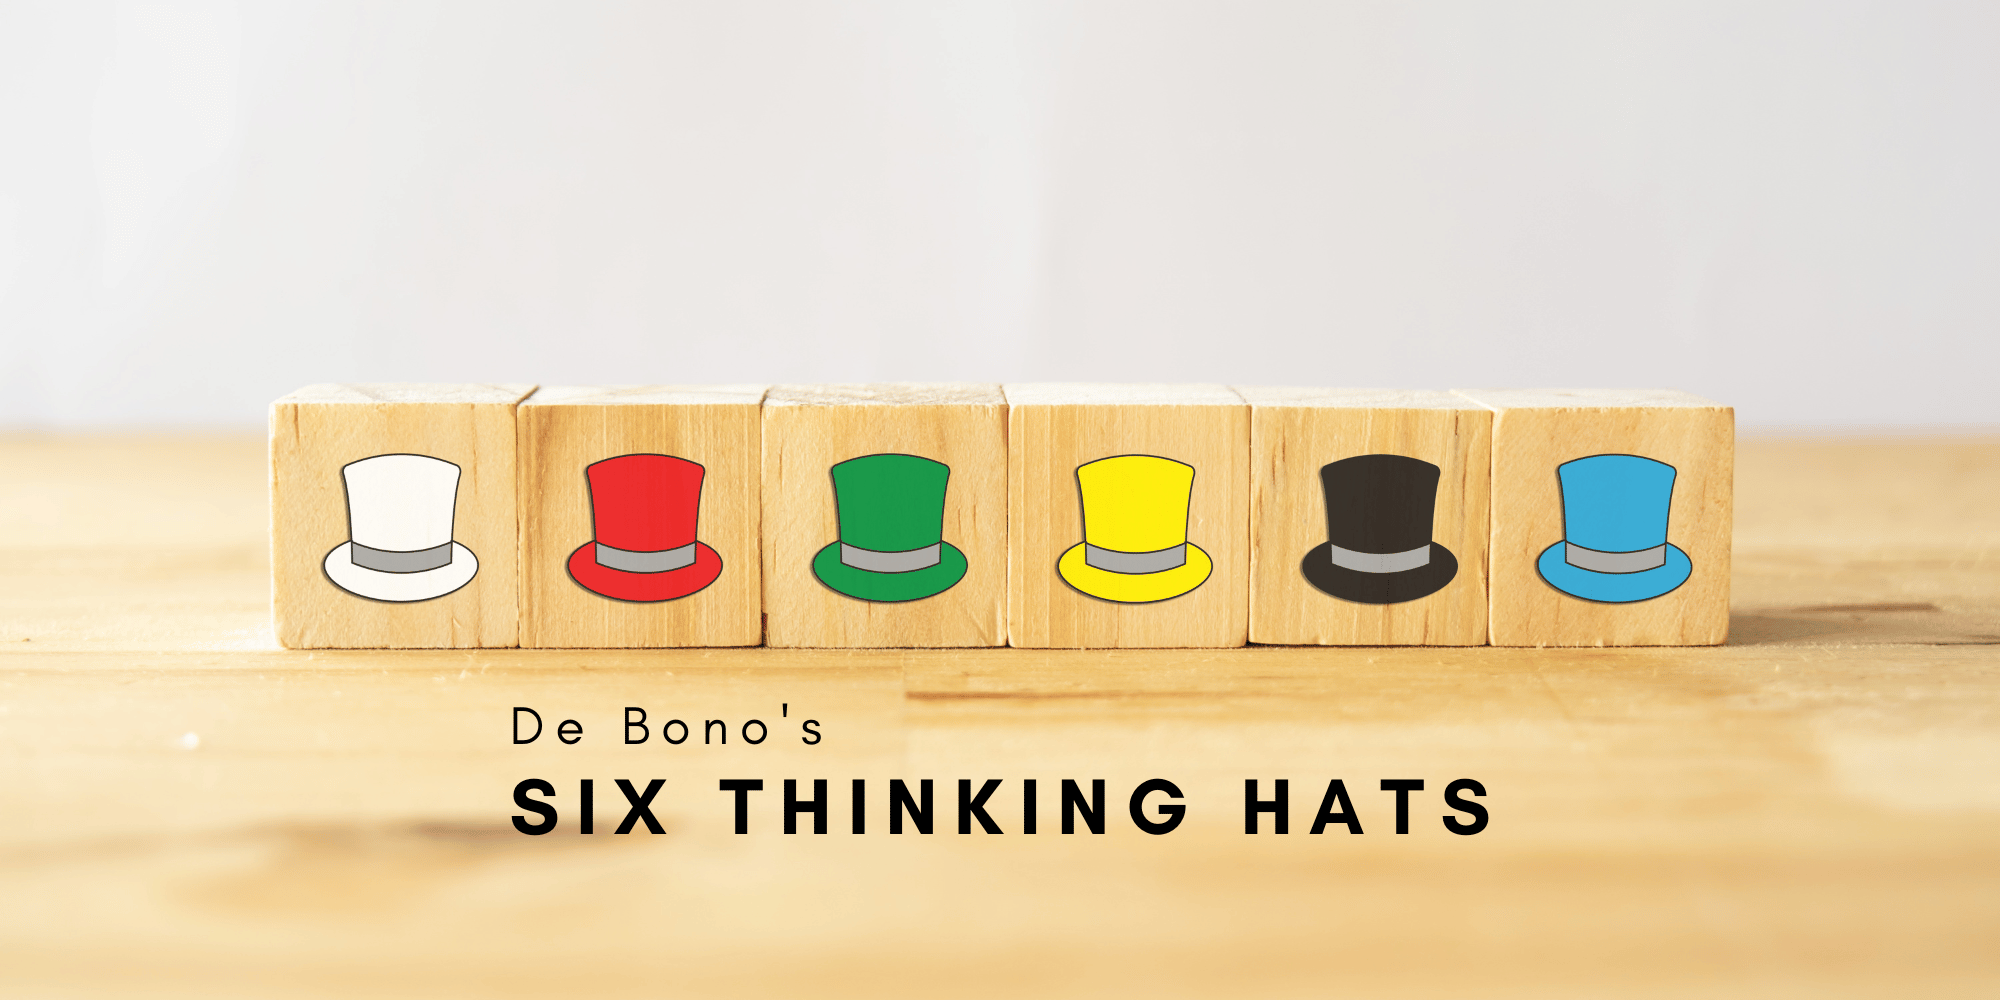 De Bono's Six Thinking Hats